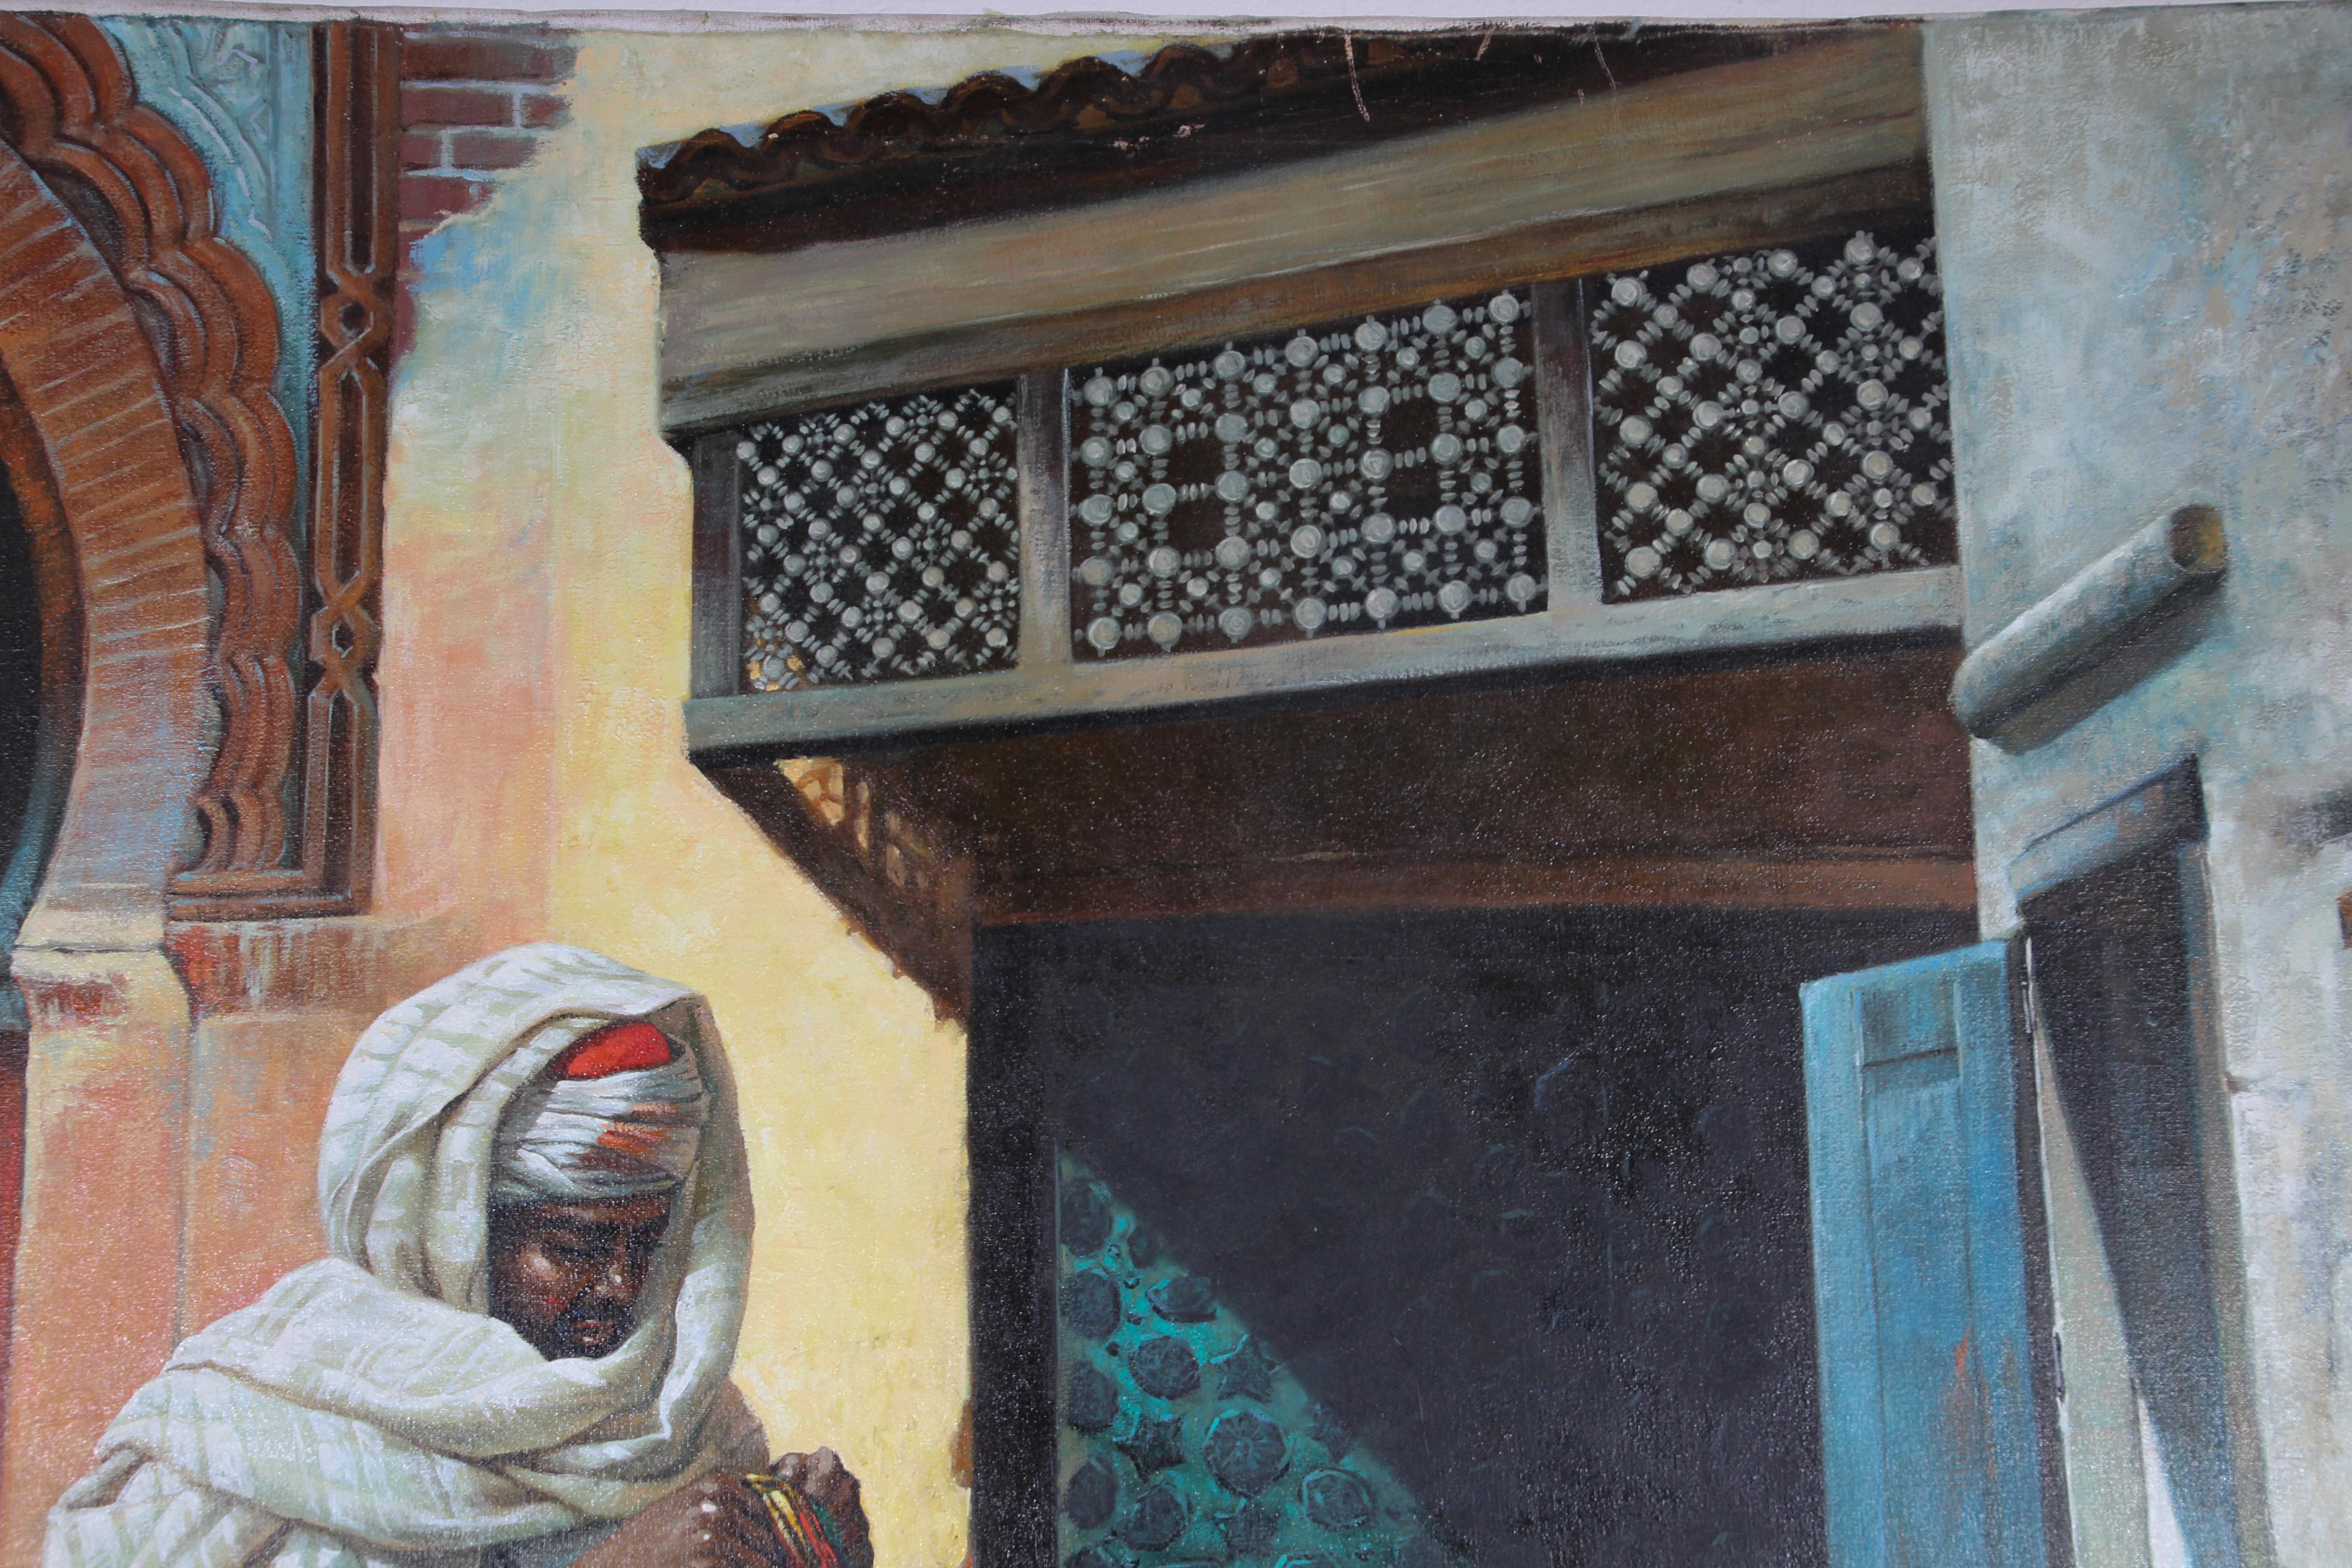 Canvas Moroccan Moorish Orientalist Oil Painting For Sale